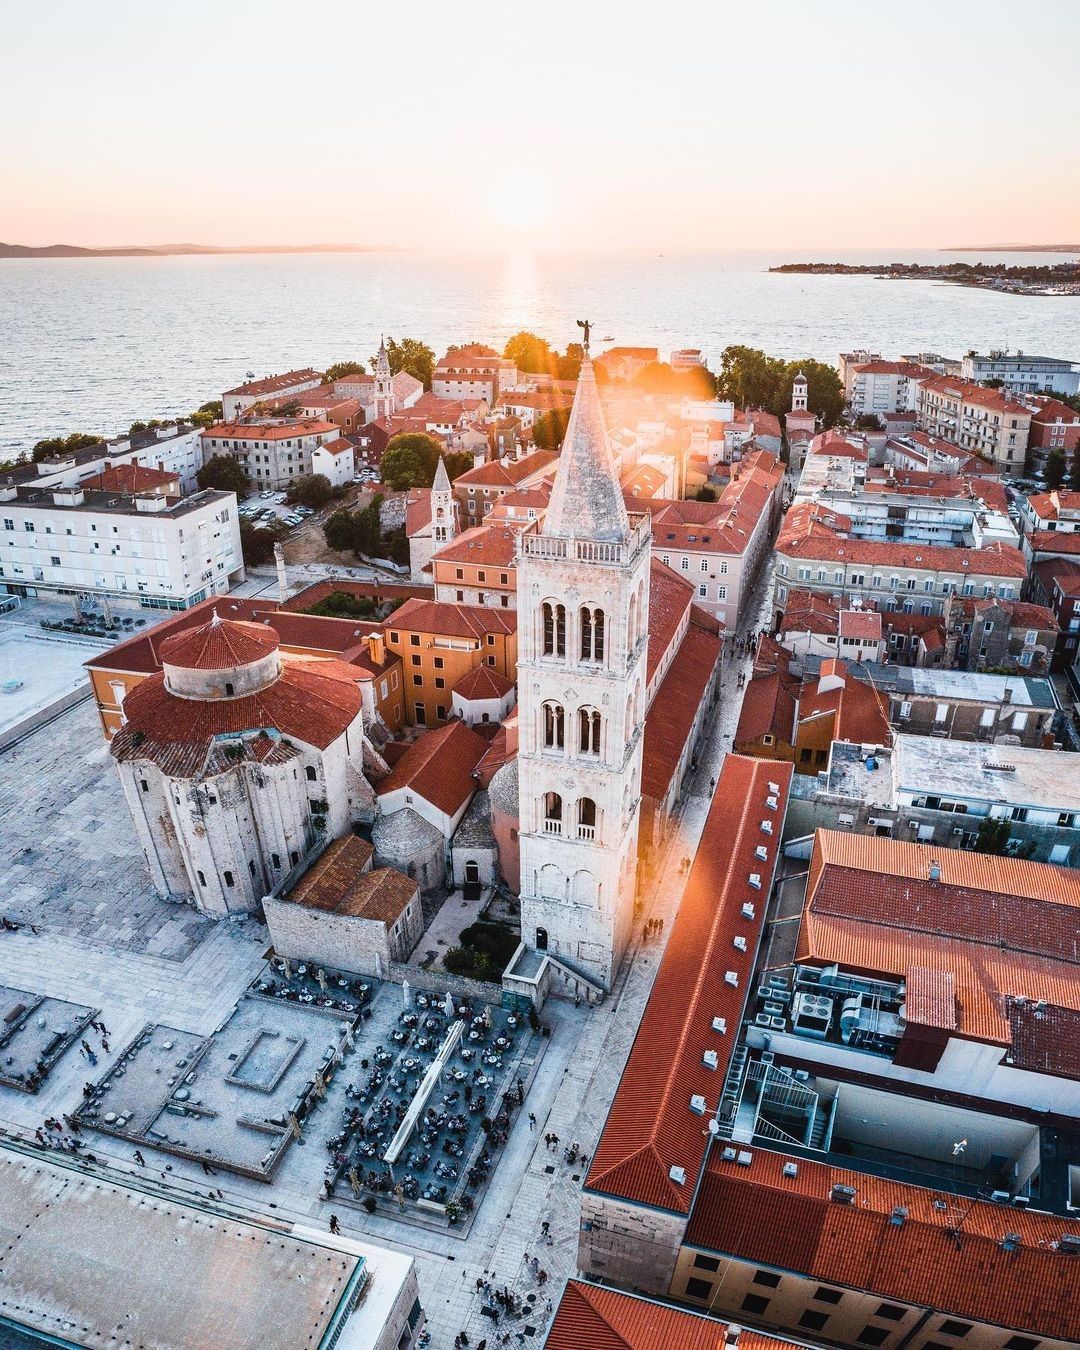 Why visit Zadar Zadar Forum St Donatus